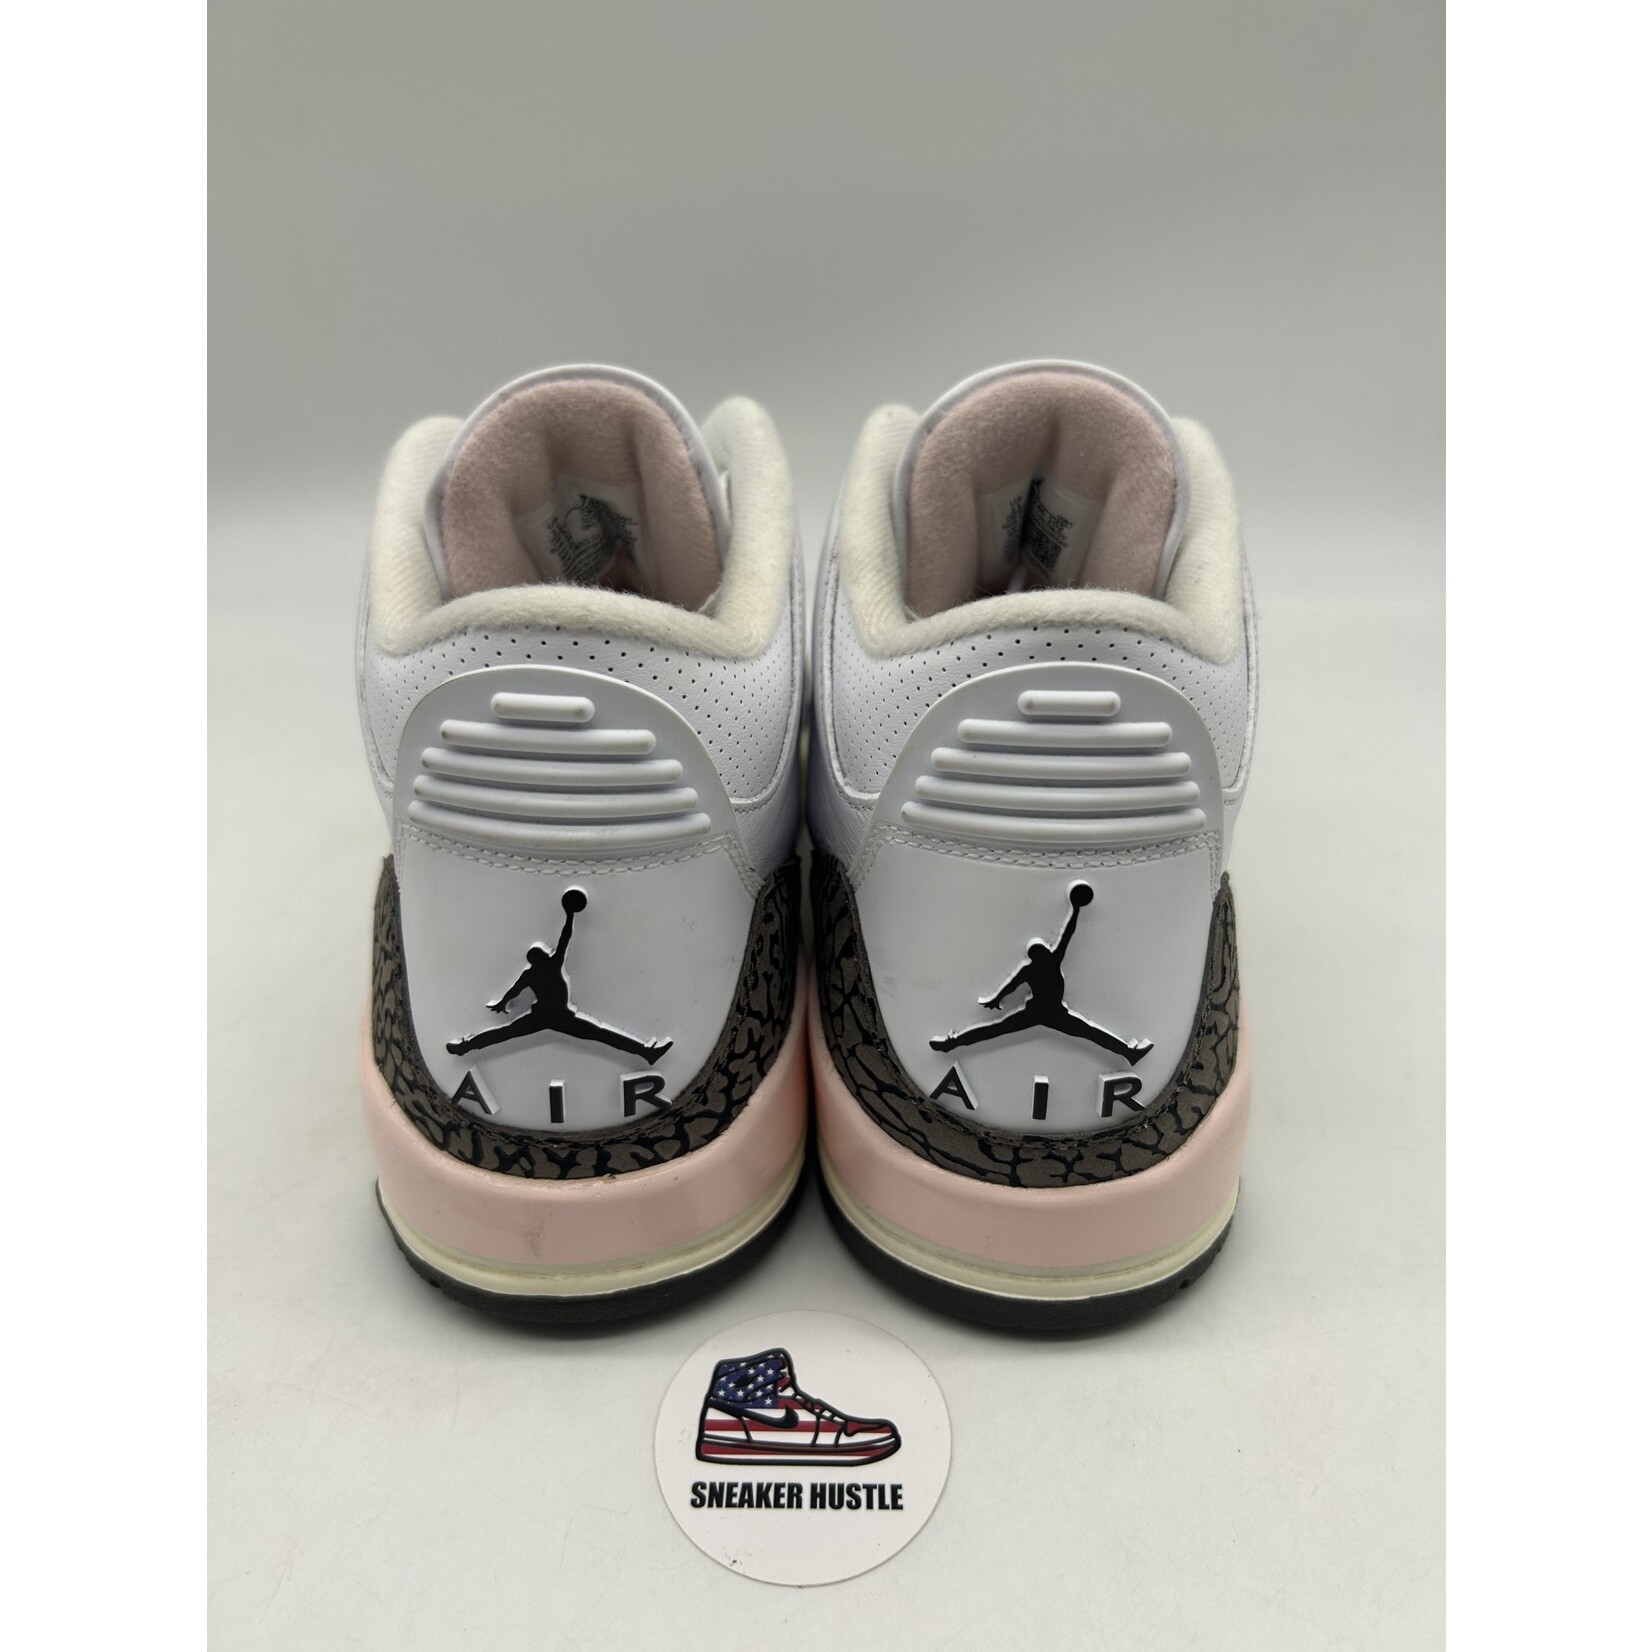 Air Jordan Jordan 3 Retro Neapolitan Dark Mocha (Women's